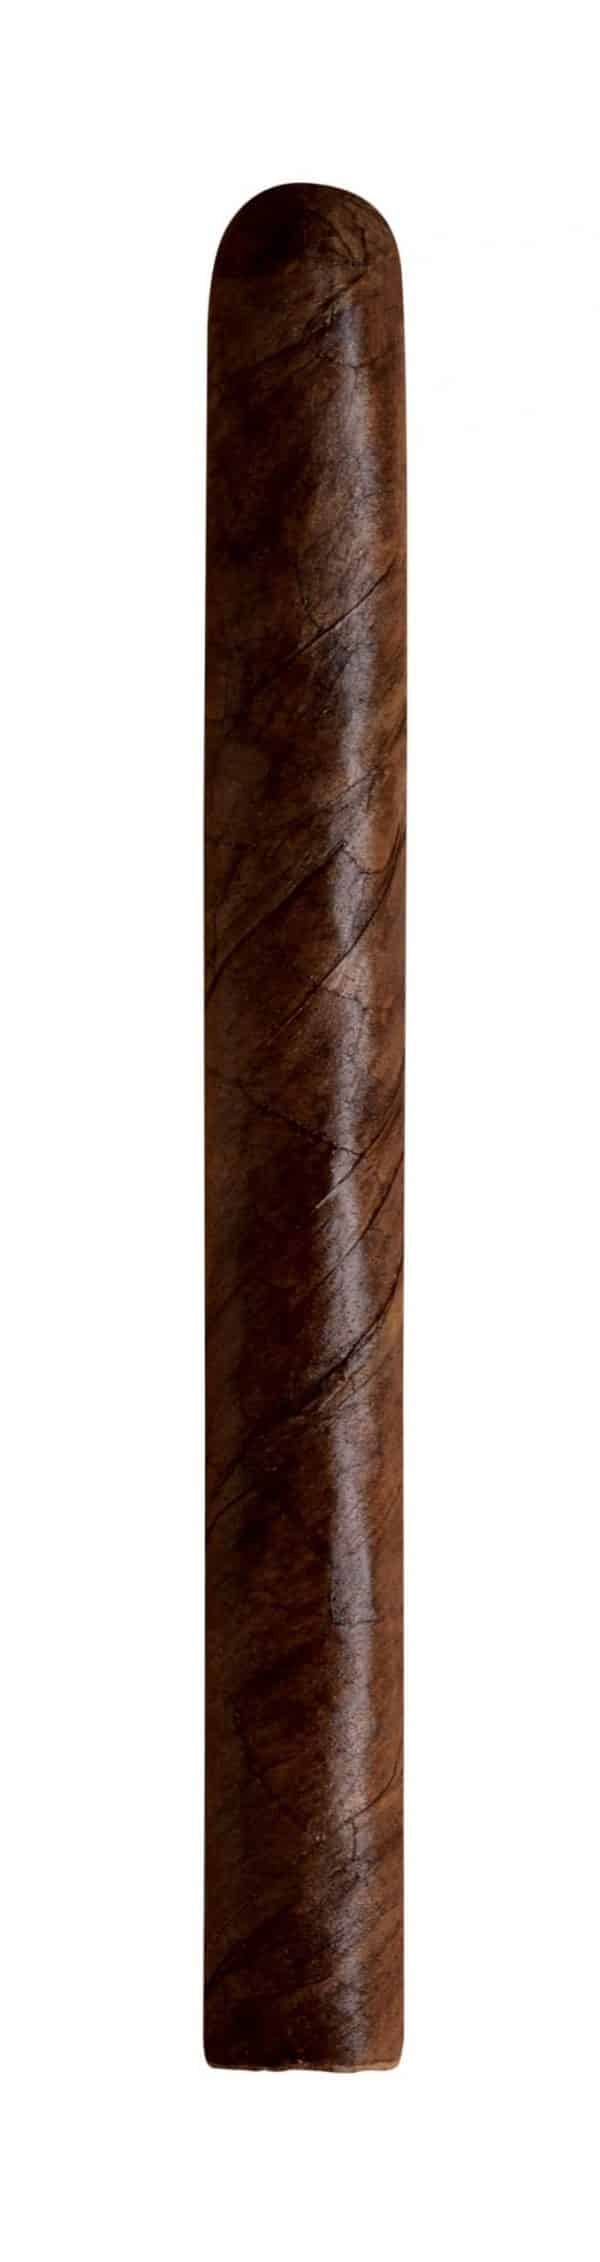 decision 550 single cigar